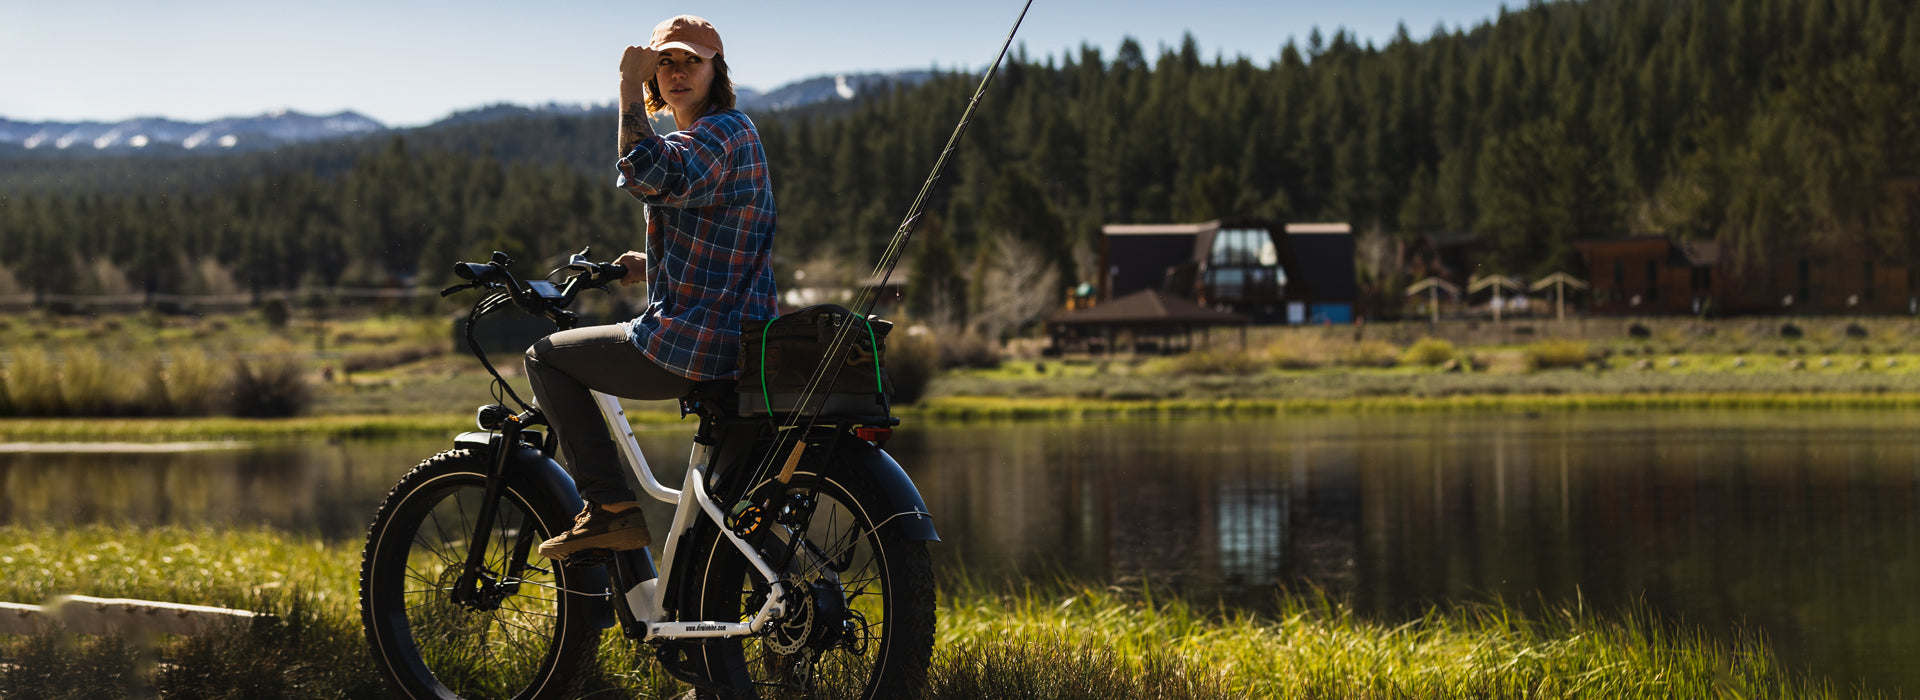 Enjoy outdoor days with Dirwin electric bike